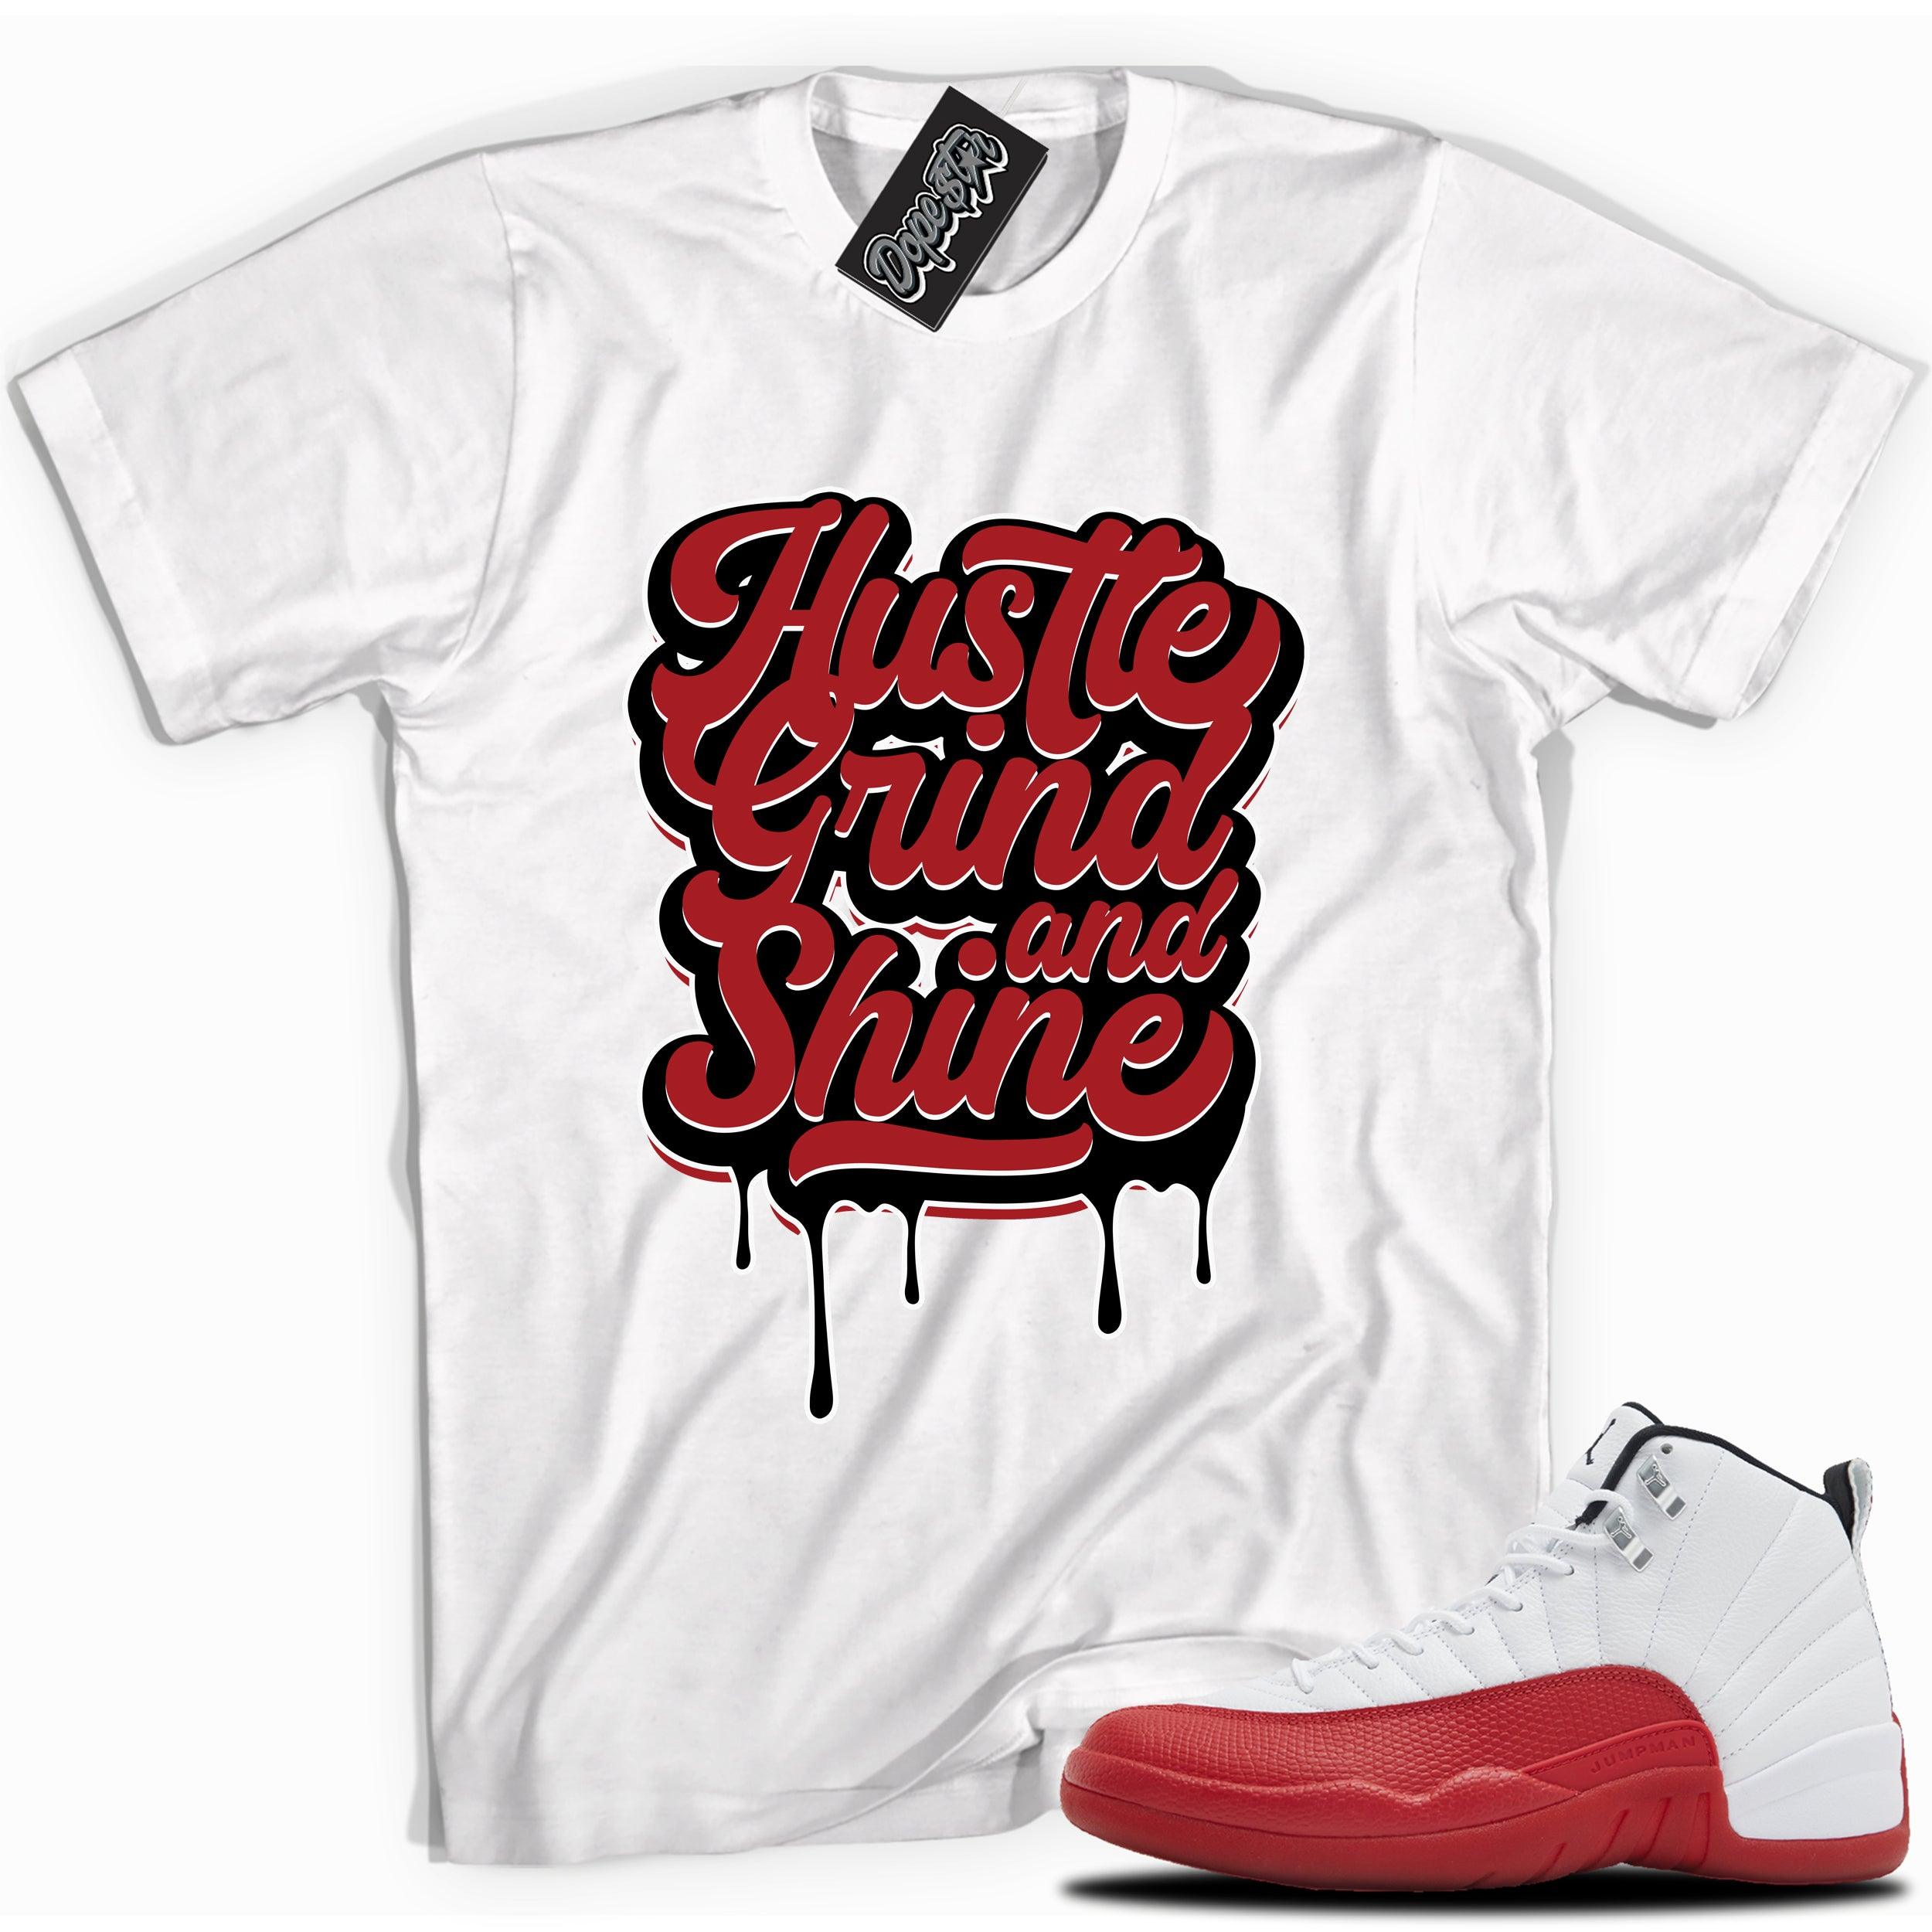 Air Jordan 12s Retro Cherry 2023 Shirt - Hustle Grind And Shine - Sneaker Shirts Outlet